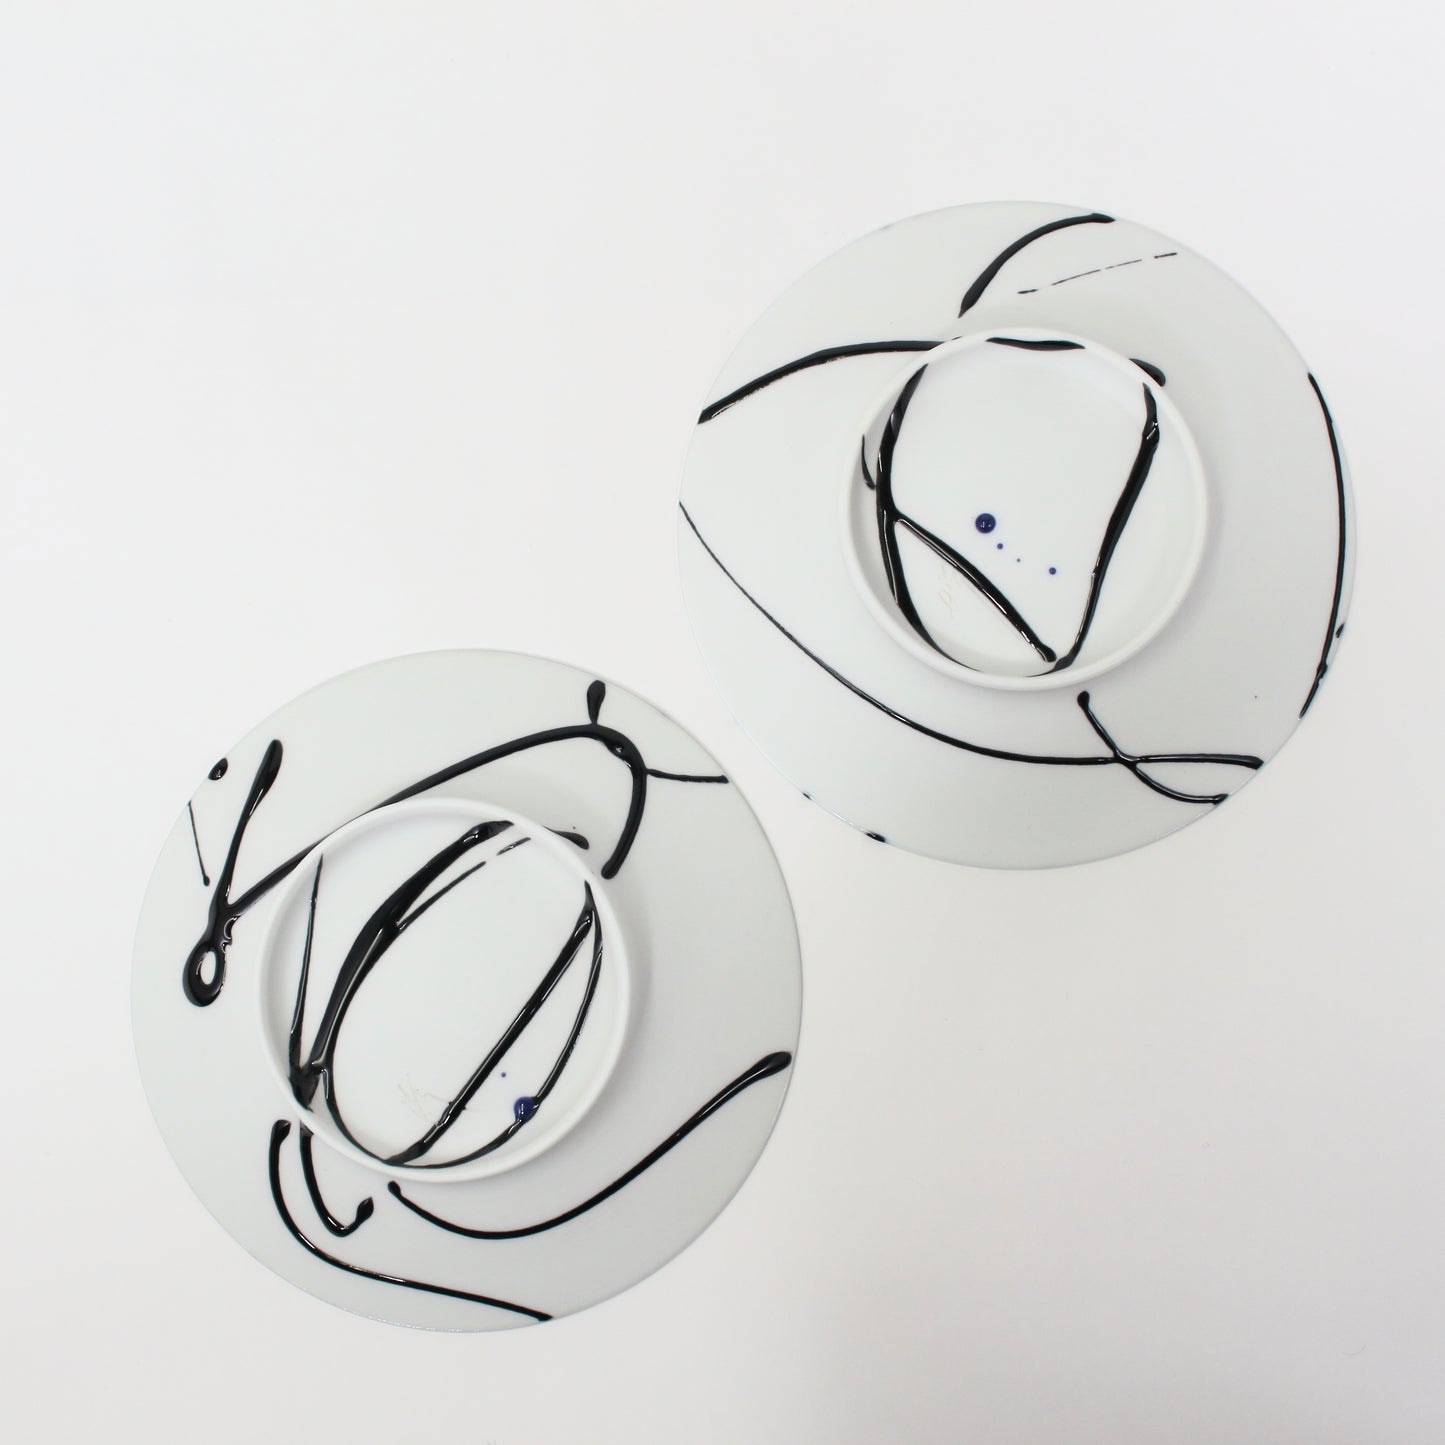 Arita ware | Akio Momota | jet black plate set of 2